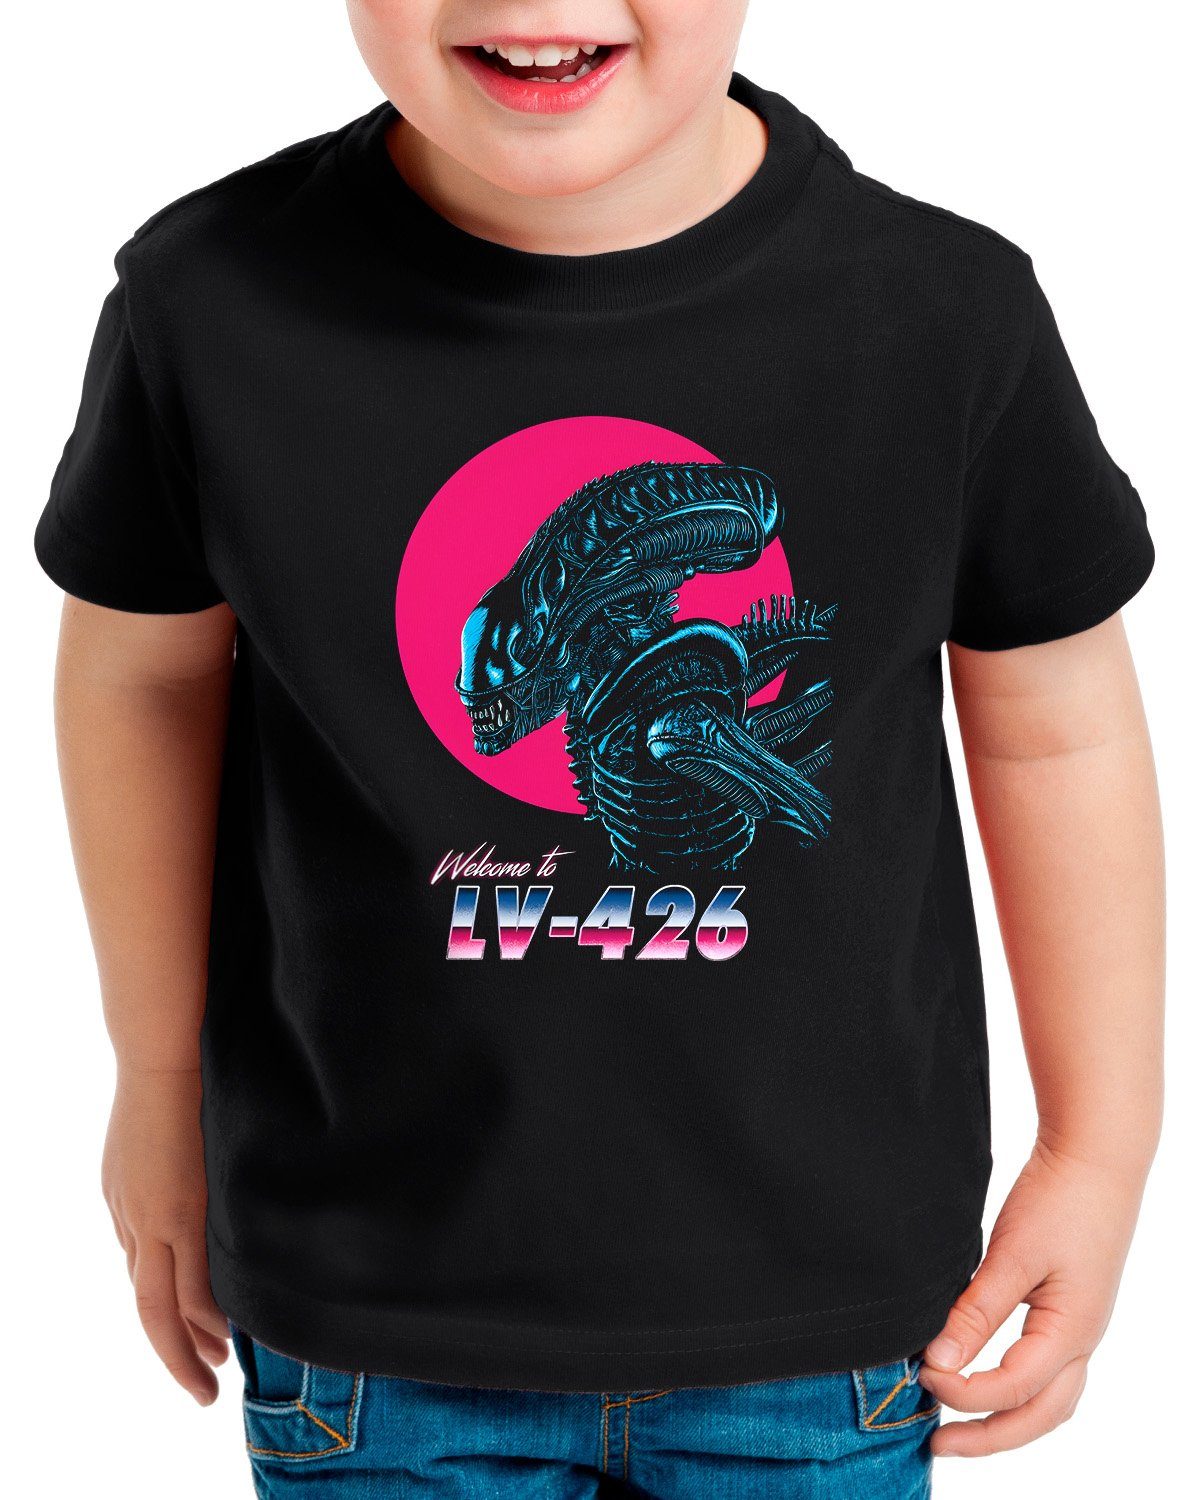 Print-Shirt xenomorph predator Kinder scott Come to ridley alien LV-426 style3 T-Shirt